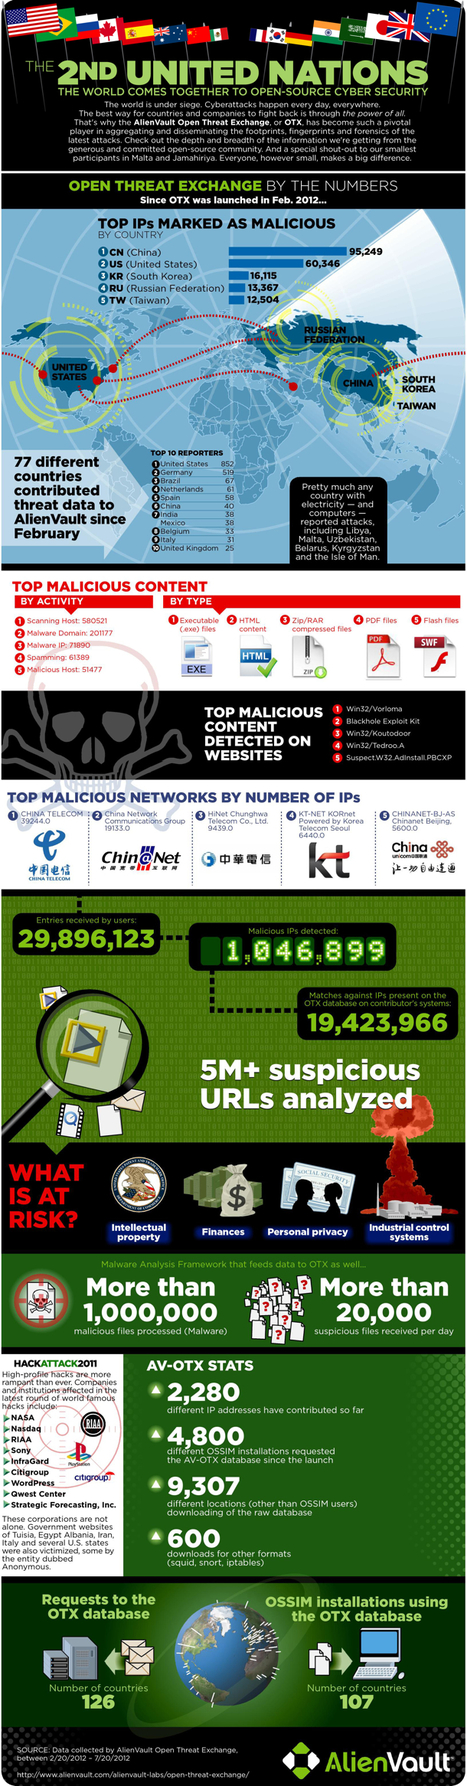 Why Cyber Security is Important [Infographic] | ICT Security-Sécurité PC et Internet | Scoop.it